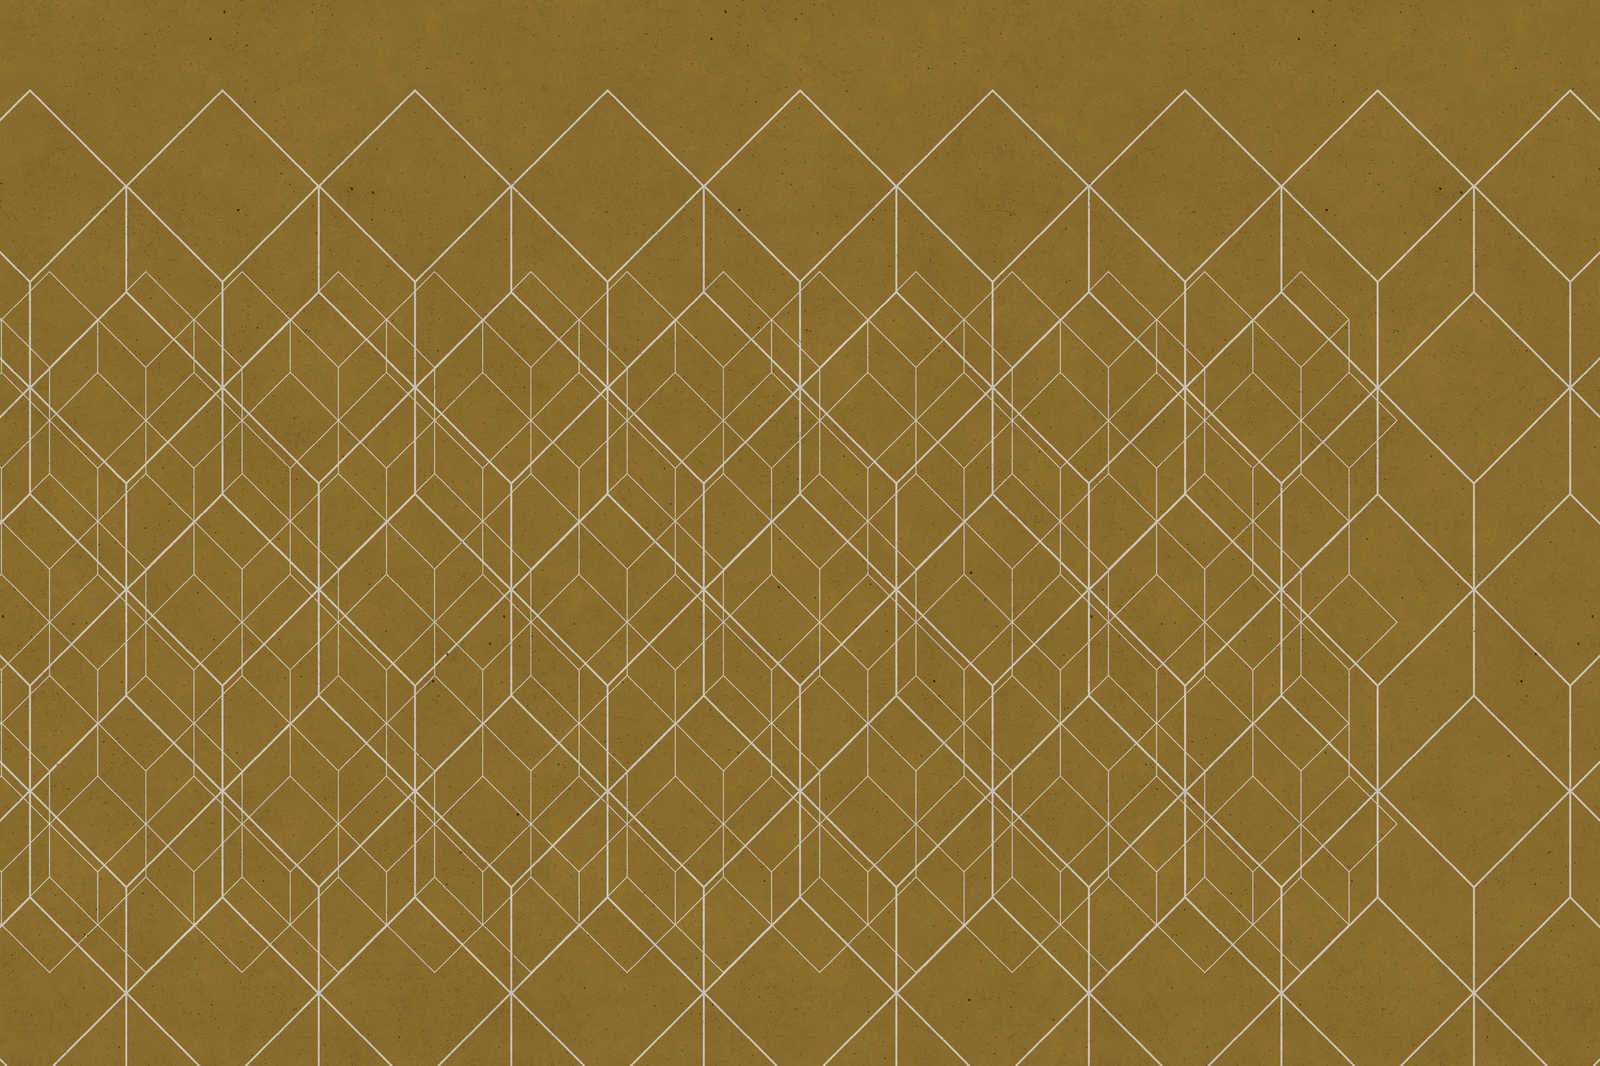             Leinwandbild geometrisches Muster – 0,90 m x 0,60 m
        